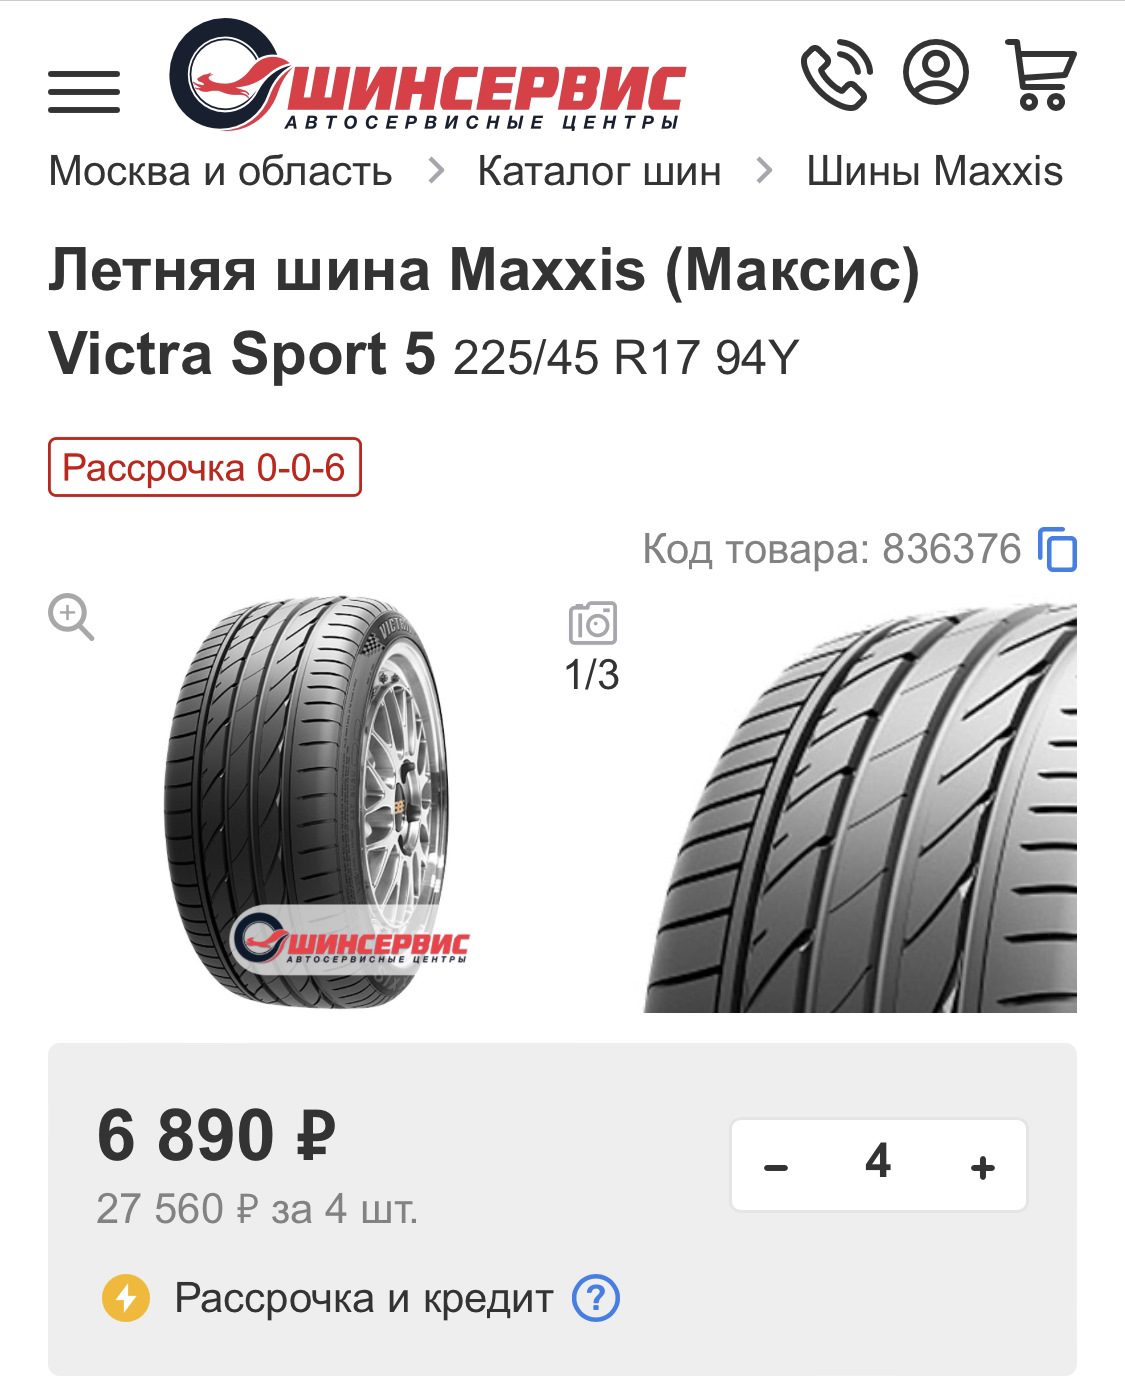 Шины maxxis victra sport 5 отзывы. Maxxis Victra Sport 5. Maxxis Victra Sport 5 евроэтикетка. Maxxis Victra Sport 5 225/45 r17. Maxxis vs5 SUV Victra Sport 5.